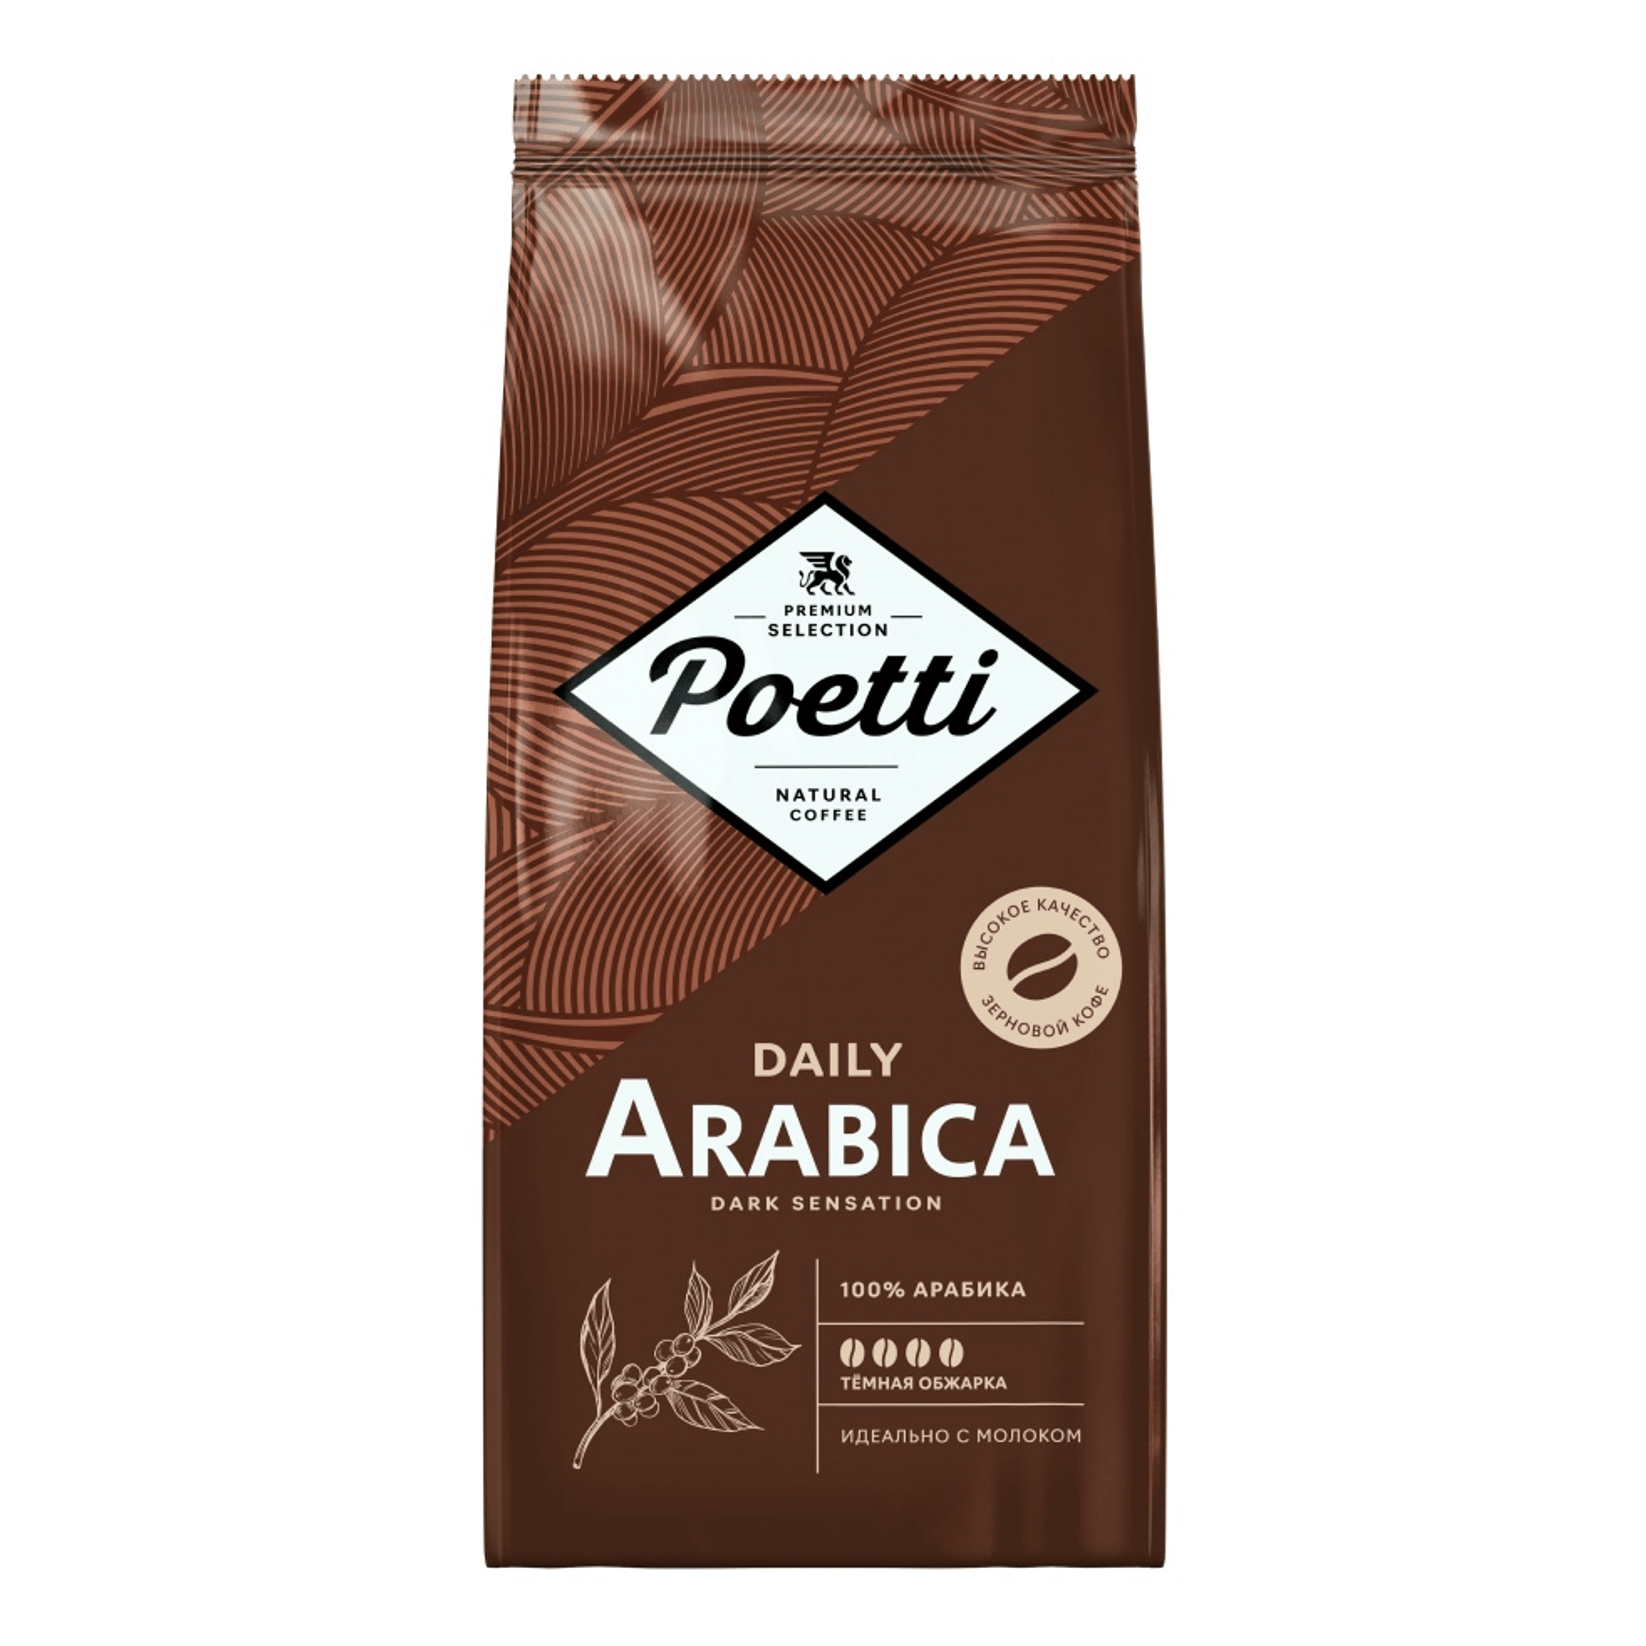 Кофе в зернах Poetti Daily Arabica Dark Sensation 750 г кофе в зернах poetti arabica 250 г